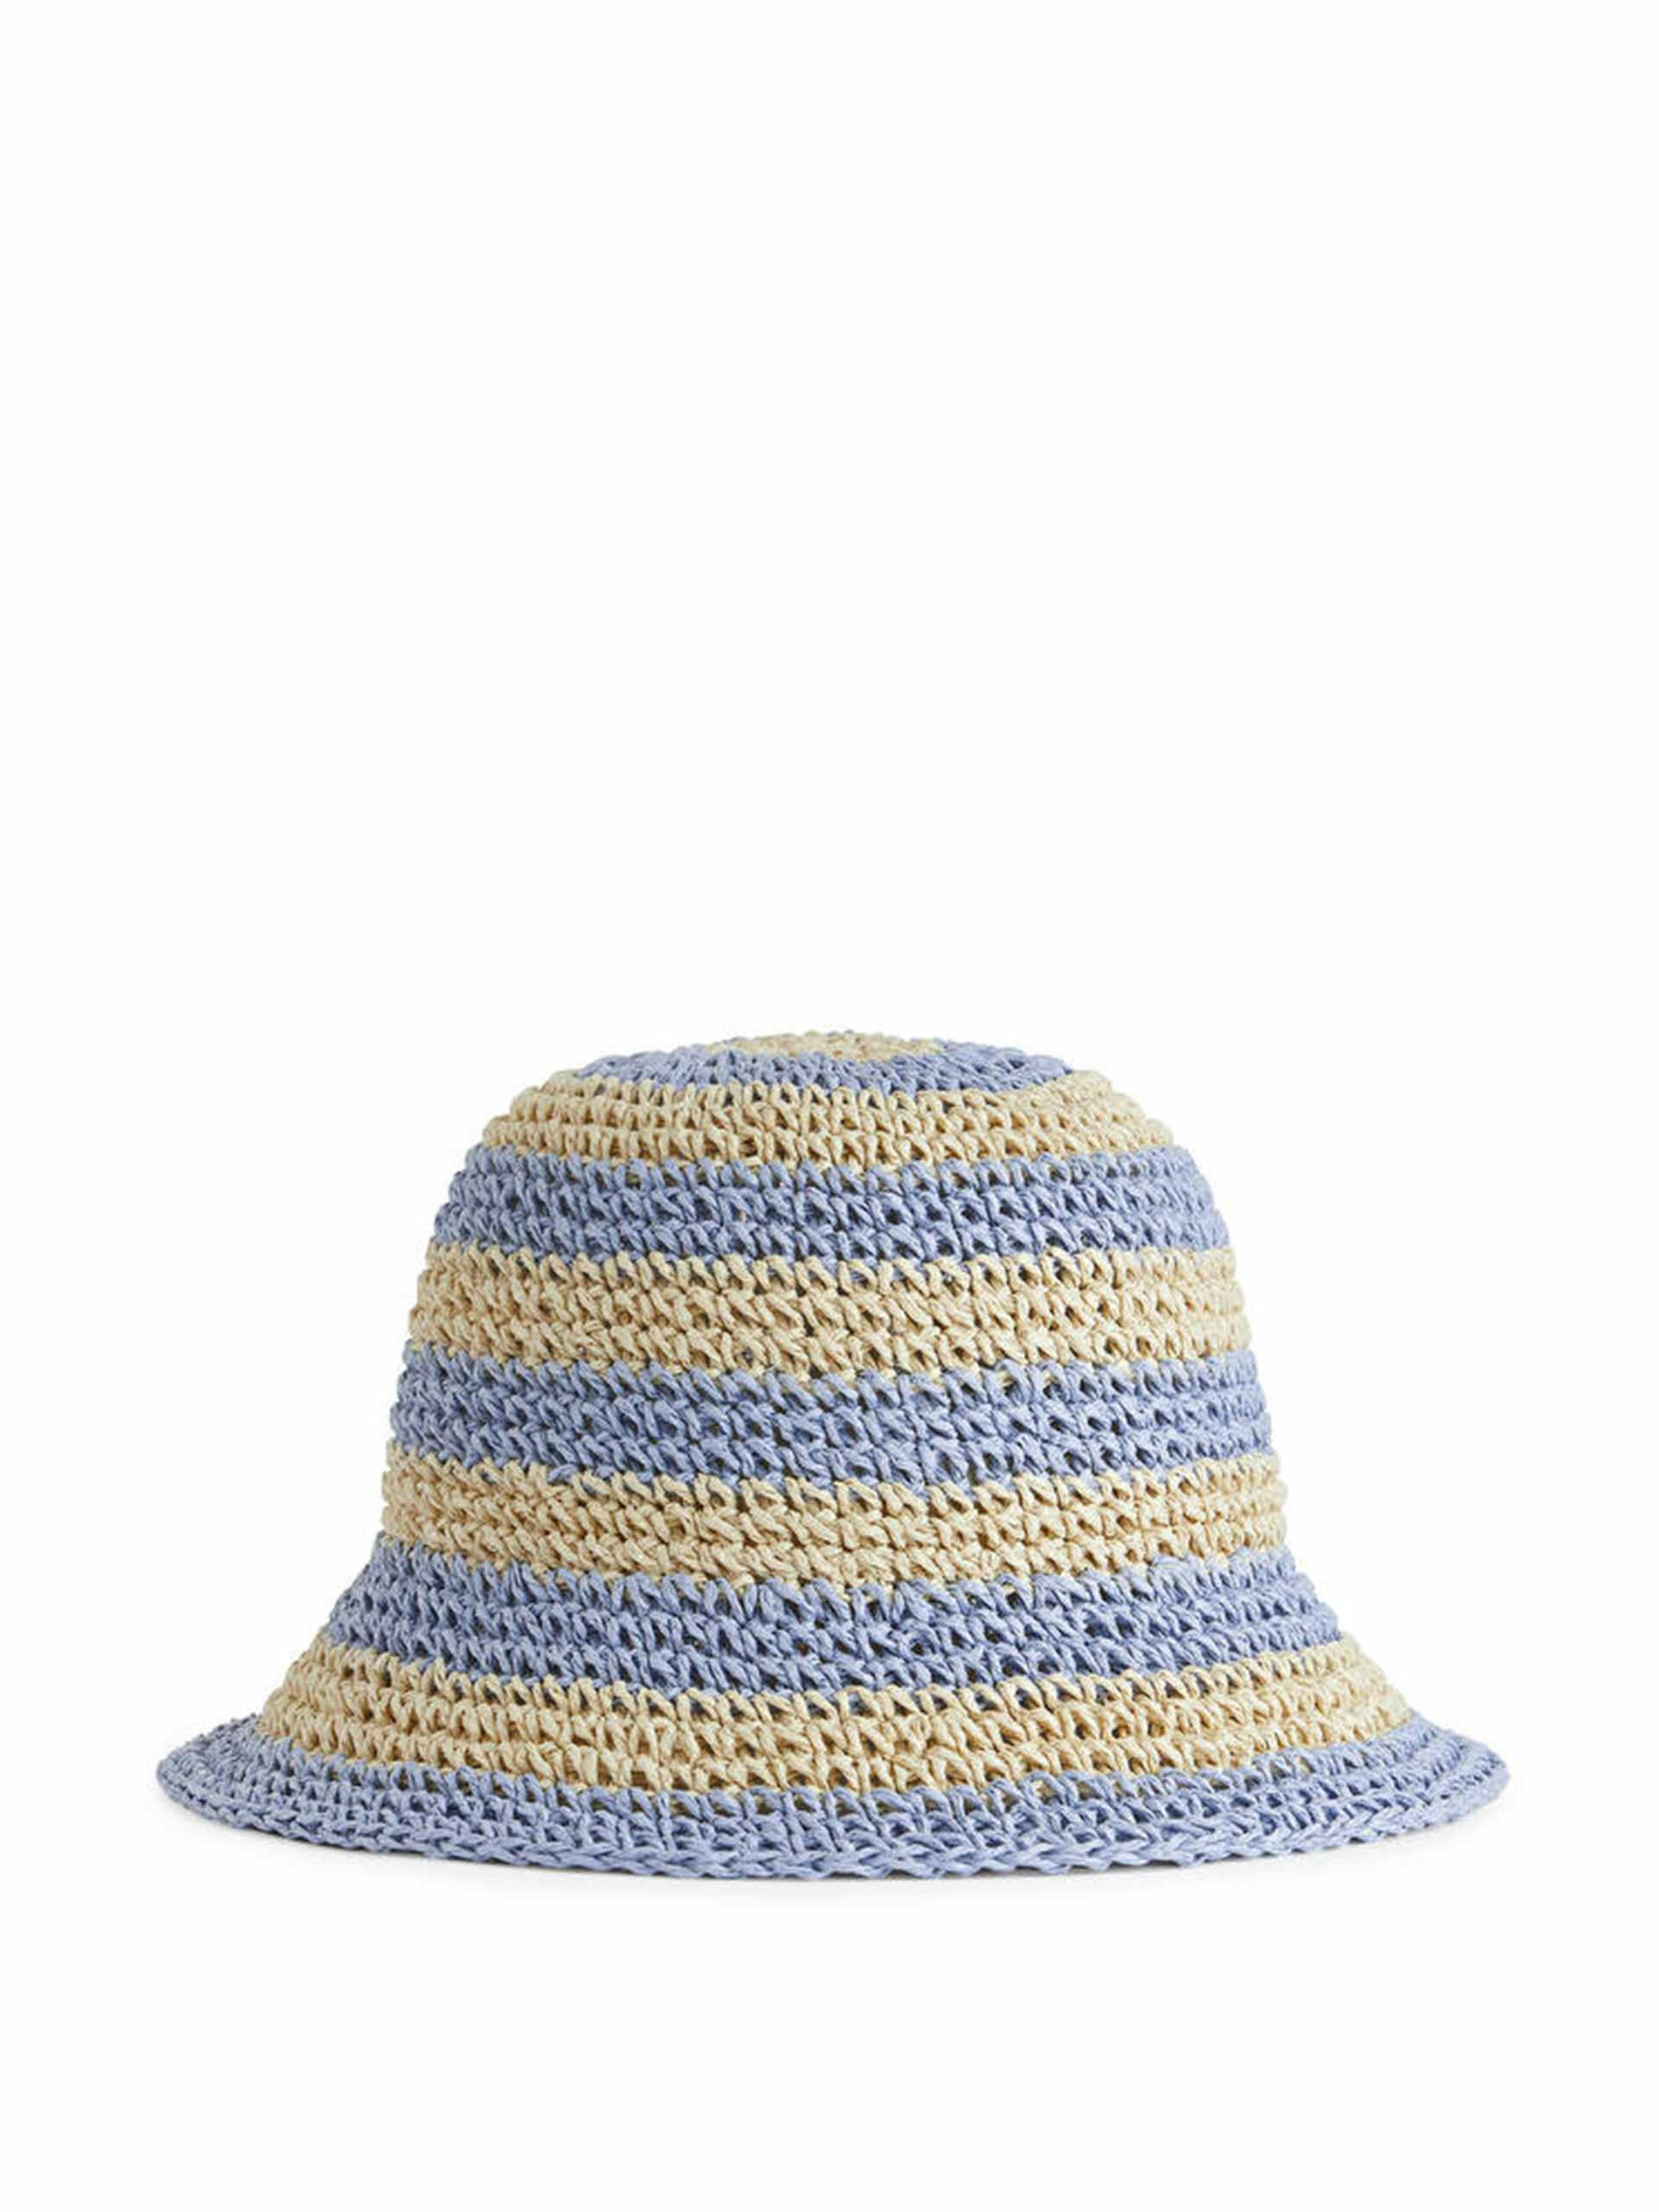 Beige/Light Blue straw hat